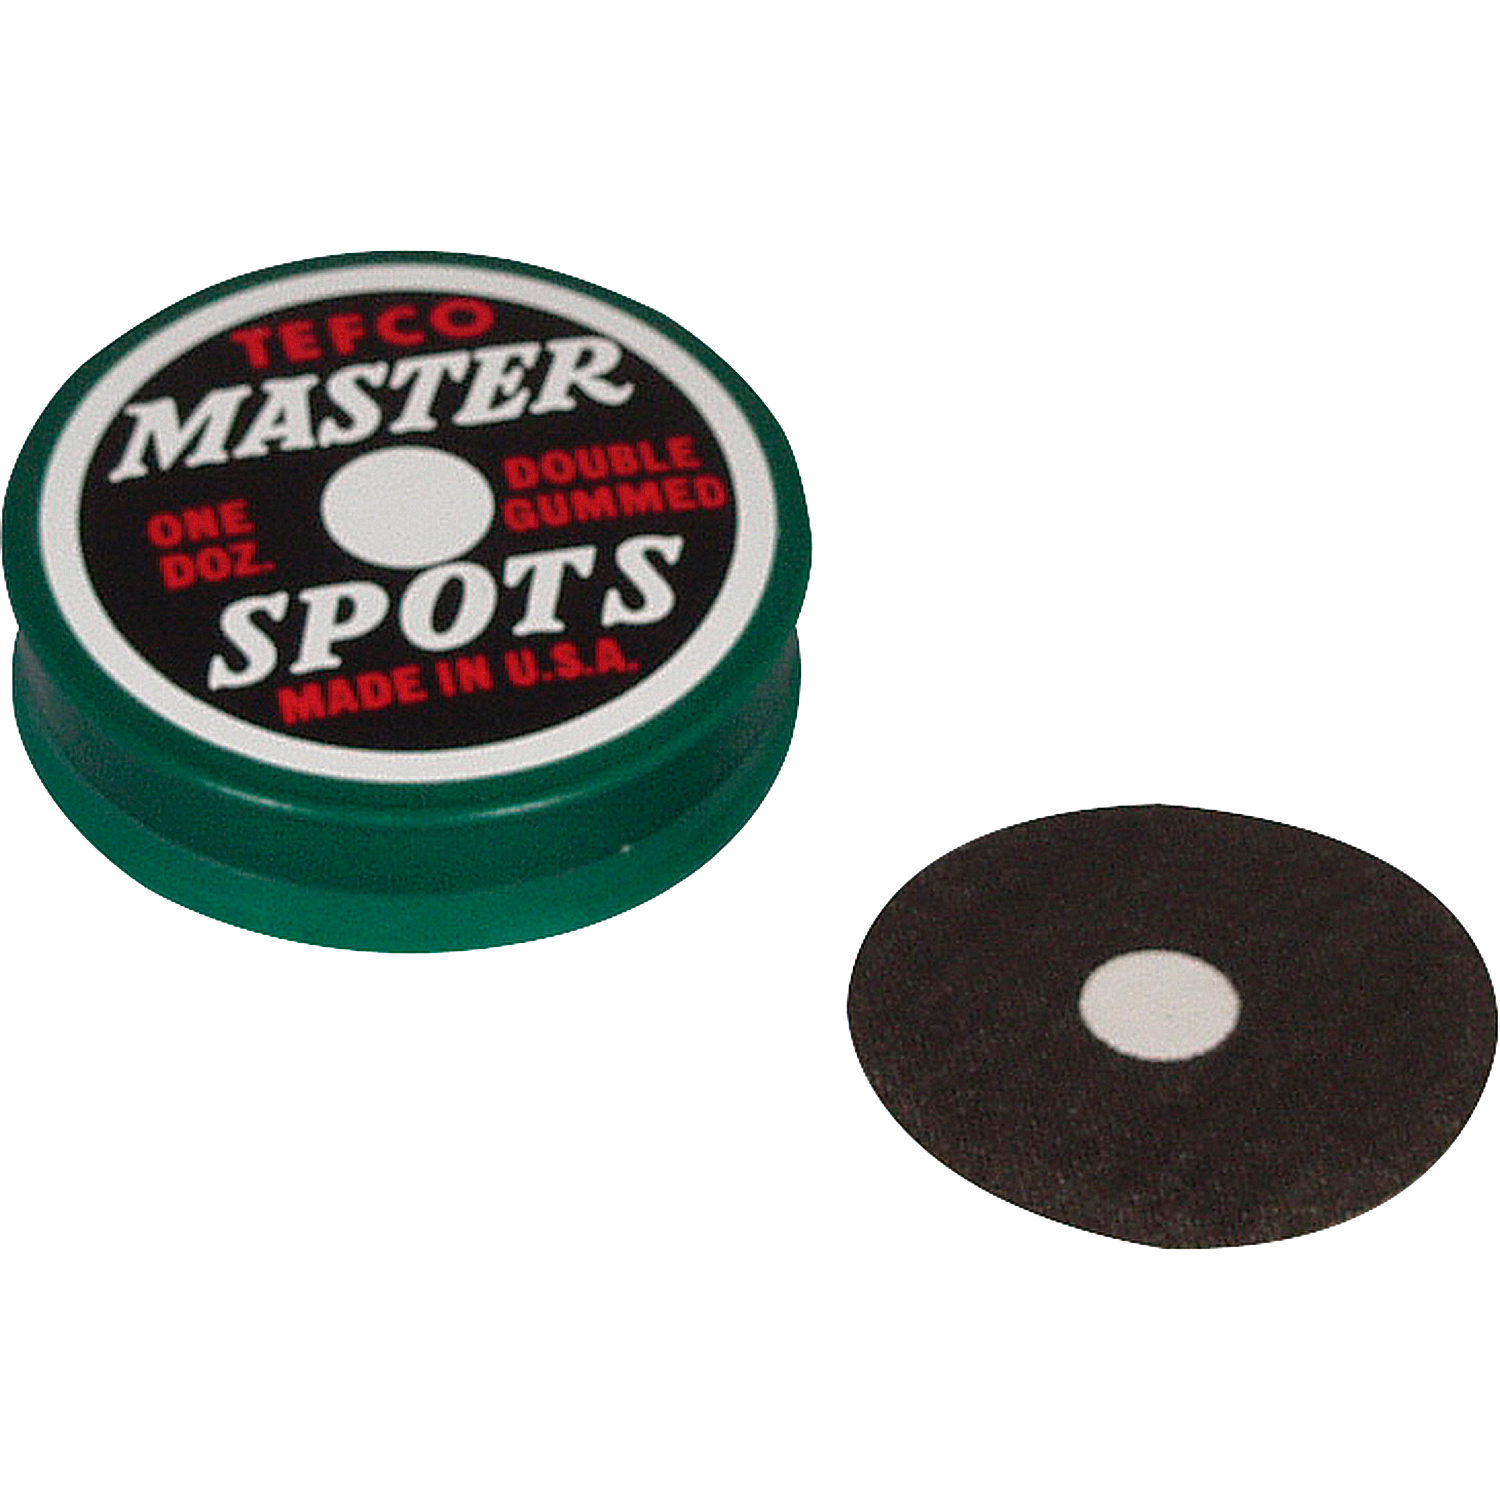 Spots - Tefco Master 35 mm, 12 pieces